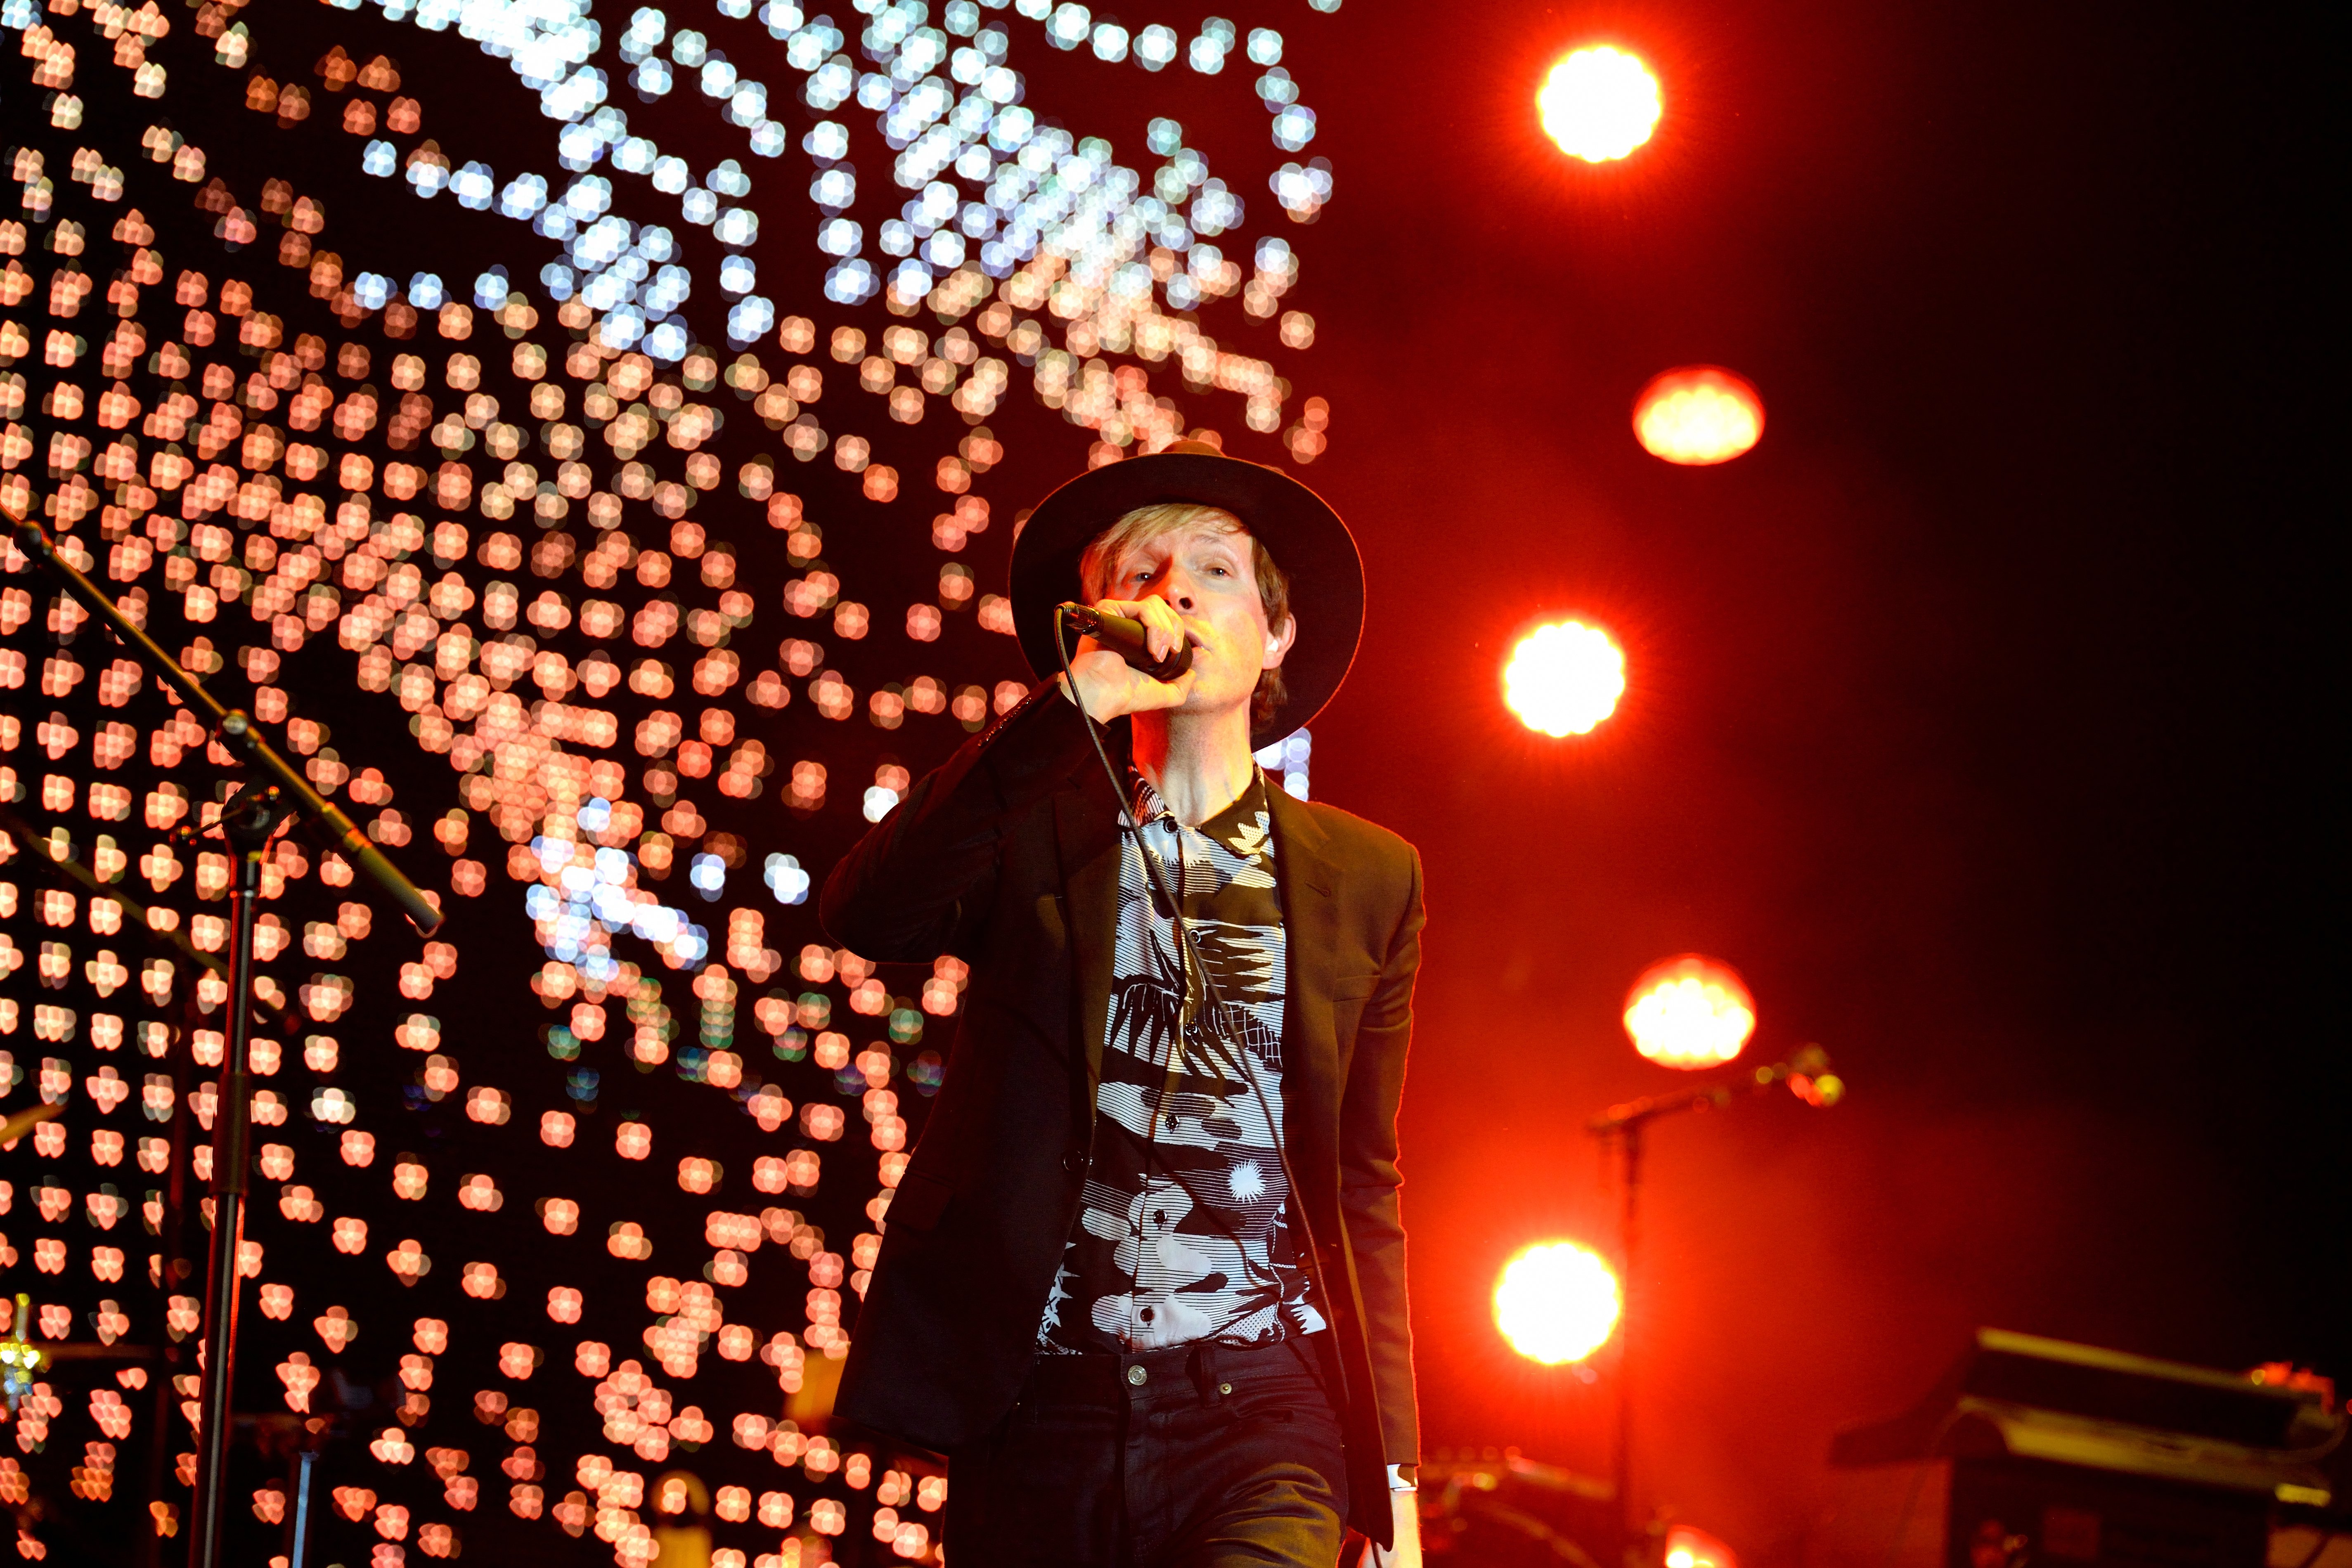 Legendary musician Beck during a concert at Dcode Festival on September 13, 2014 in Madrid, Spain | Photo: Shutterstock